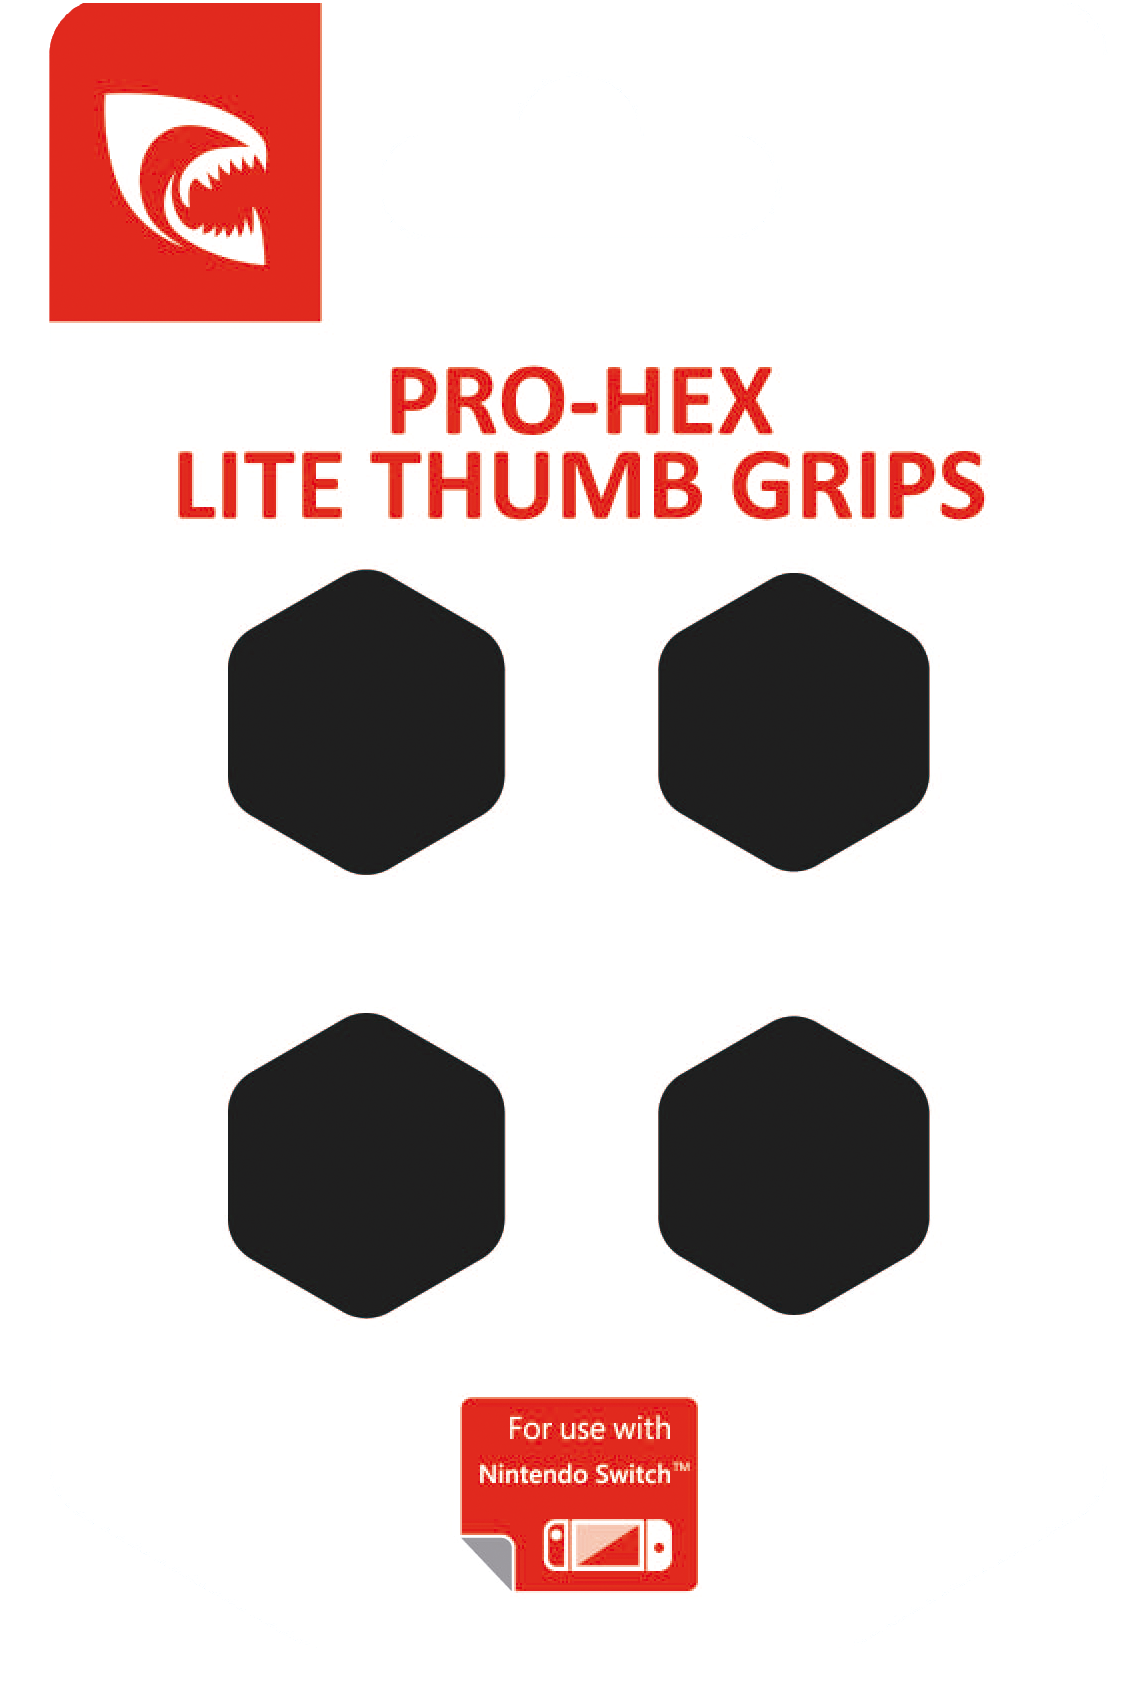 Piranha - Pro-Hex Thumb Grips - Switch Lite